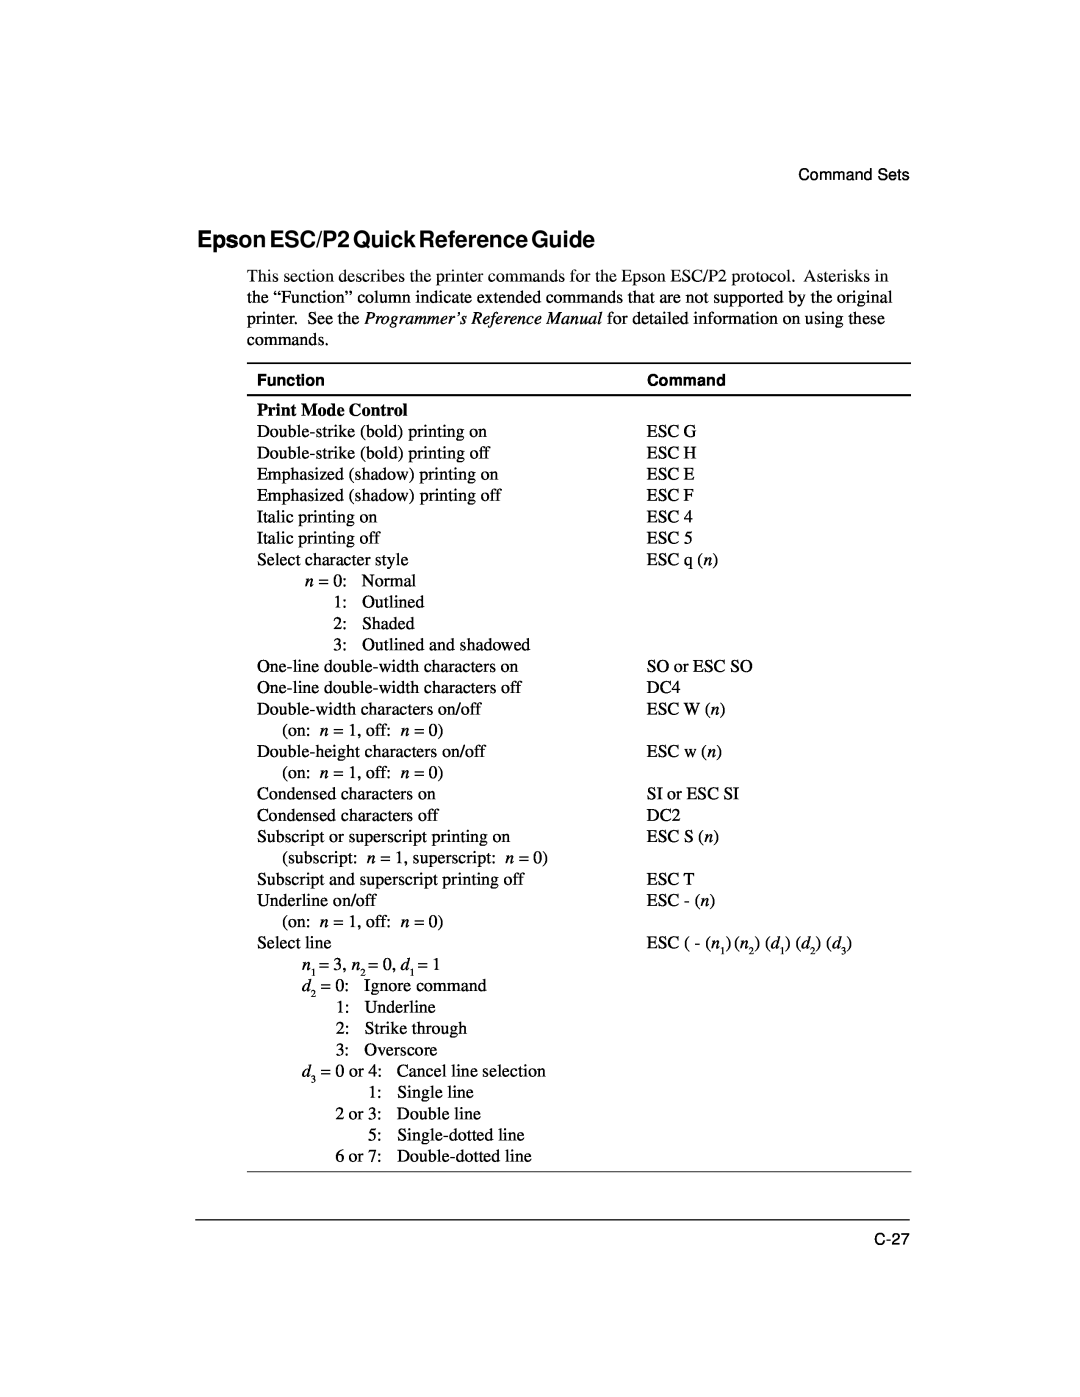 Genicom LA36 manual Epson ESC/P2 Quick Reference Guide, Print Mode Control 